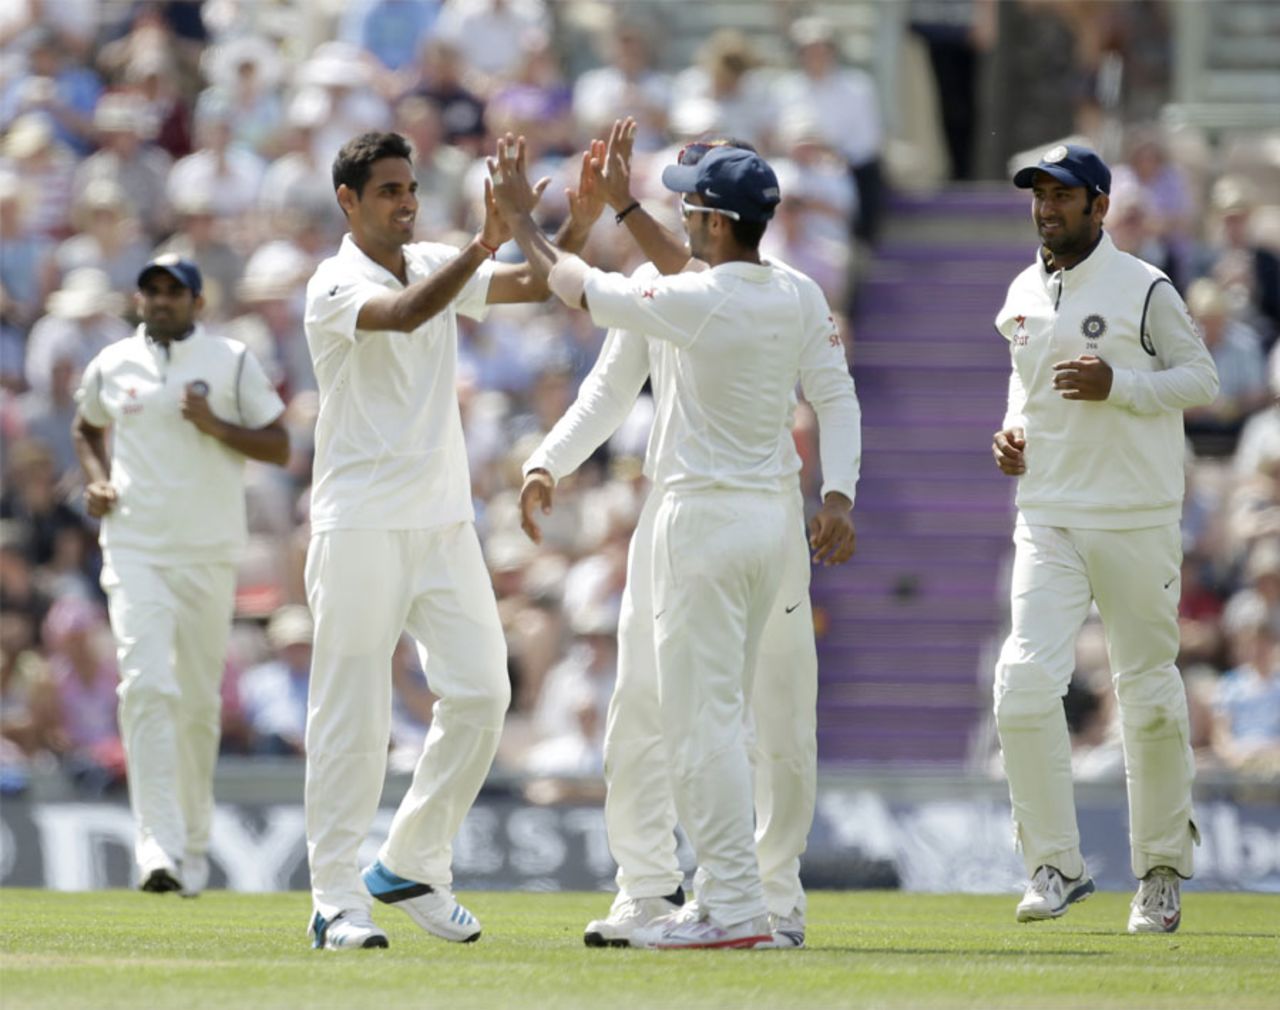 Bhuvneshwar Kumar found his rhythm after lunch, England v India, 3rd Investec Test, Ageas Bowl, 2nd day, July 28, 2014